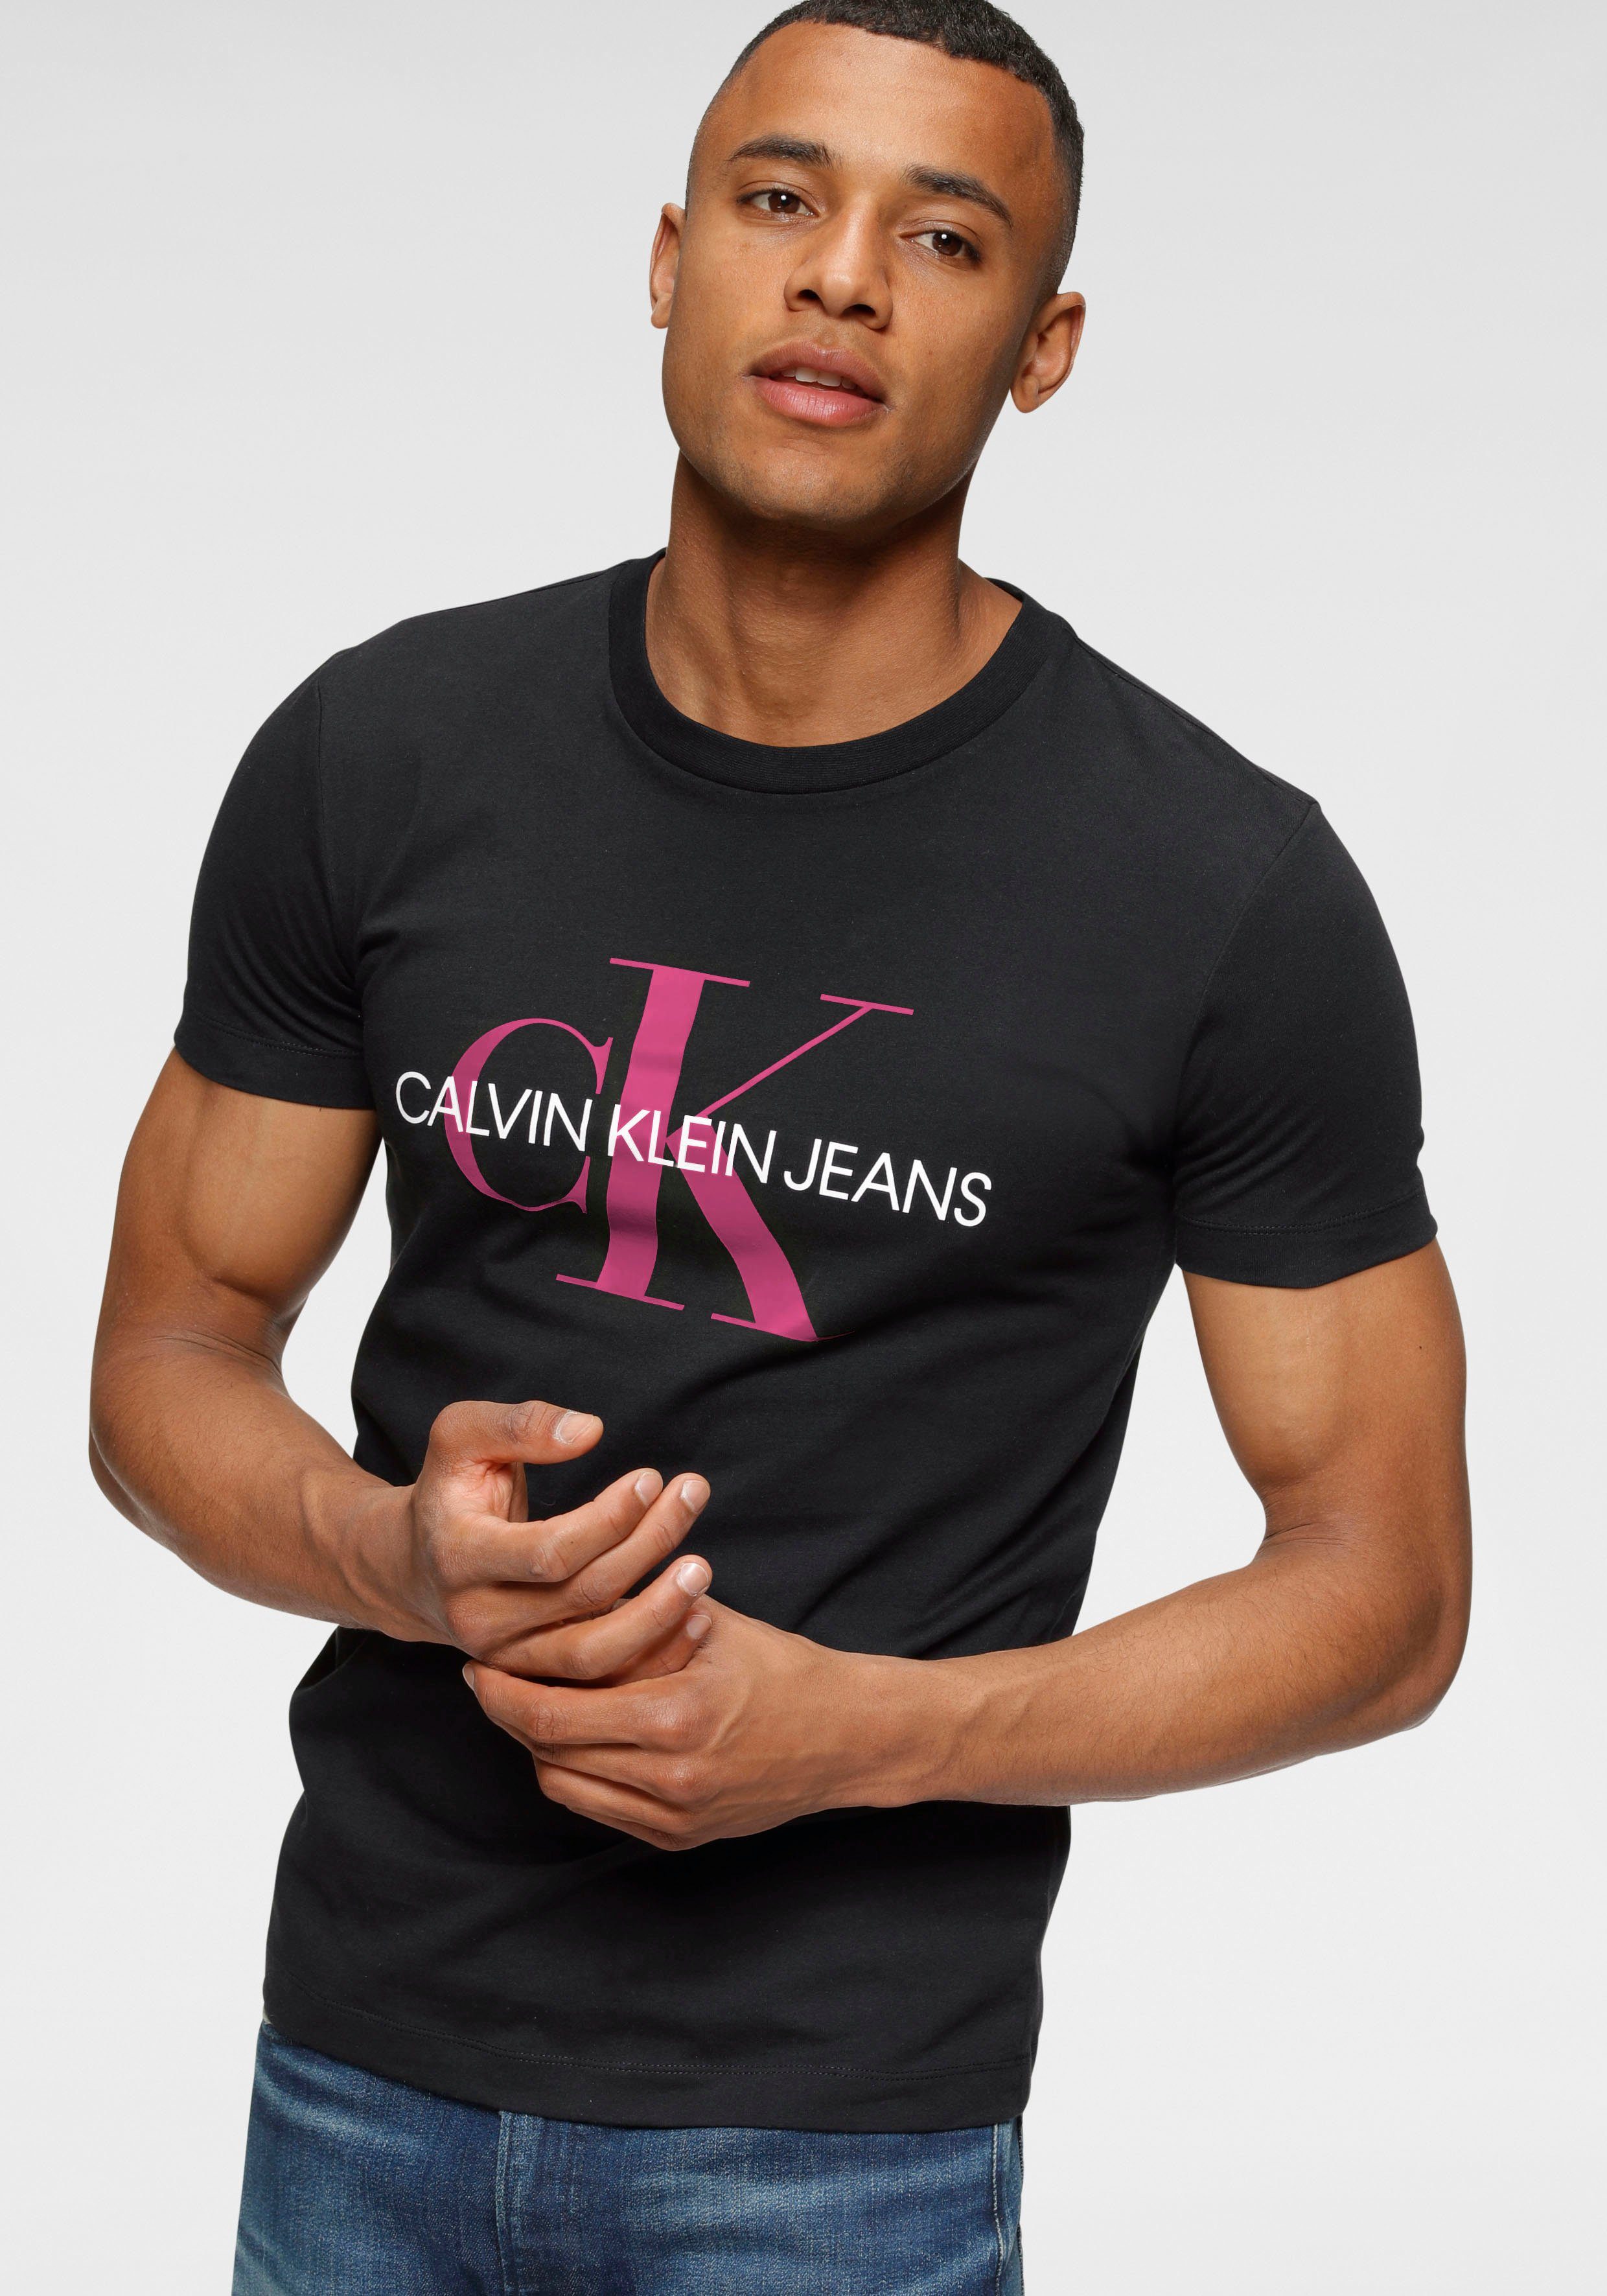 Calvin Klein Jeans T Shirt Cheap Dealers, 59% OFF | evanstoncinci.org